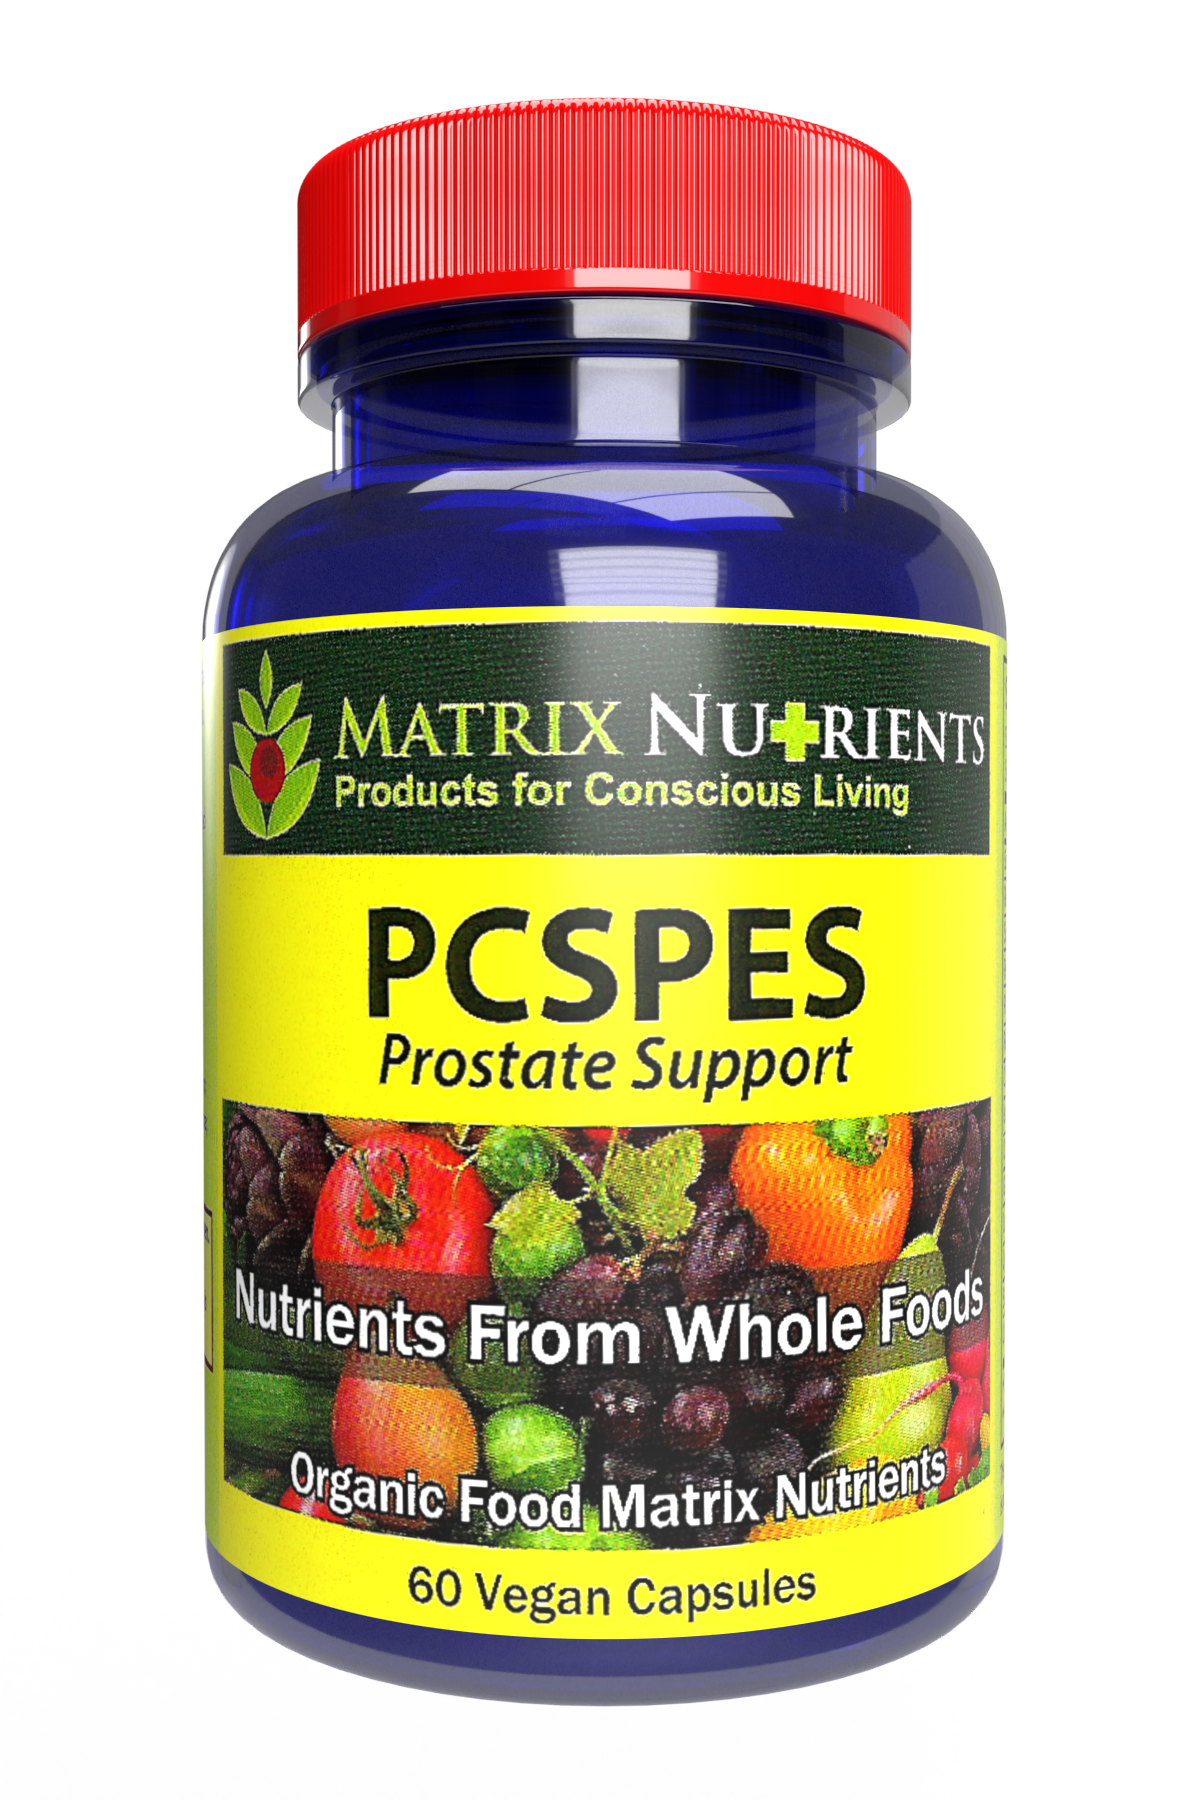 PCSPES - Lower PSA Levels - See Our LAB Results! - 100% Natural Ingredients: Saw Palmetto, Rabdosia, Scute, Plantago Focium, Chrysantaomum, Ganoderma, Lotus Seed - Vegan Capsules (60ct)